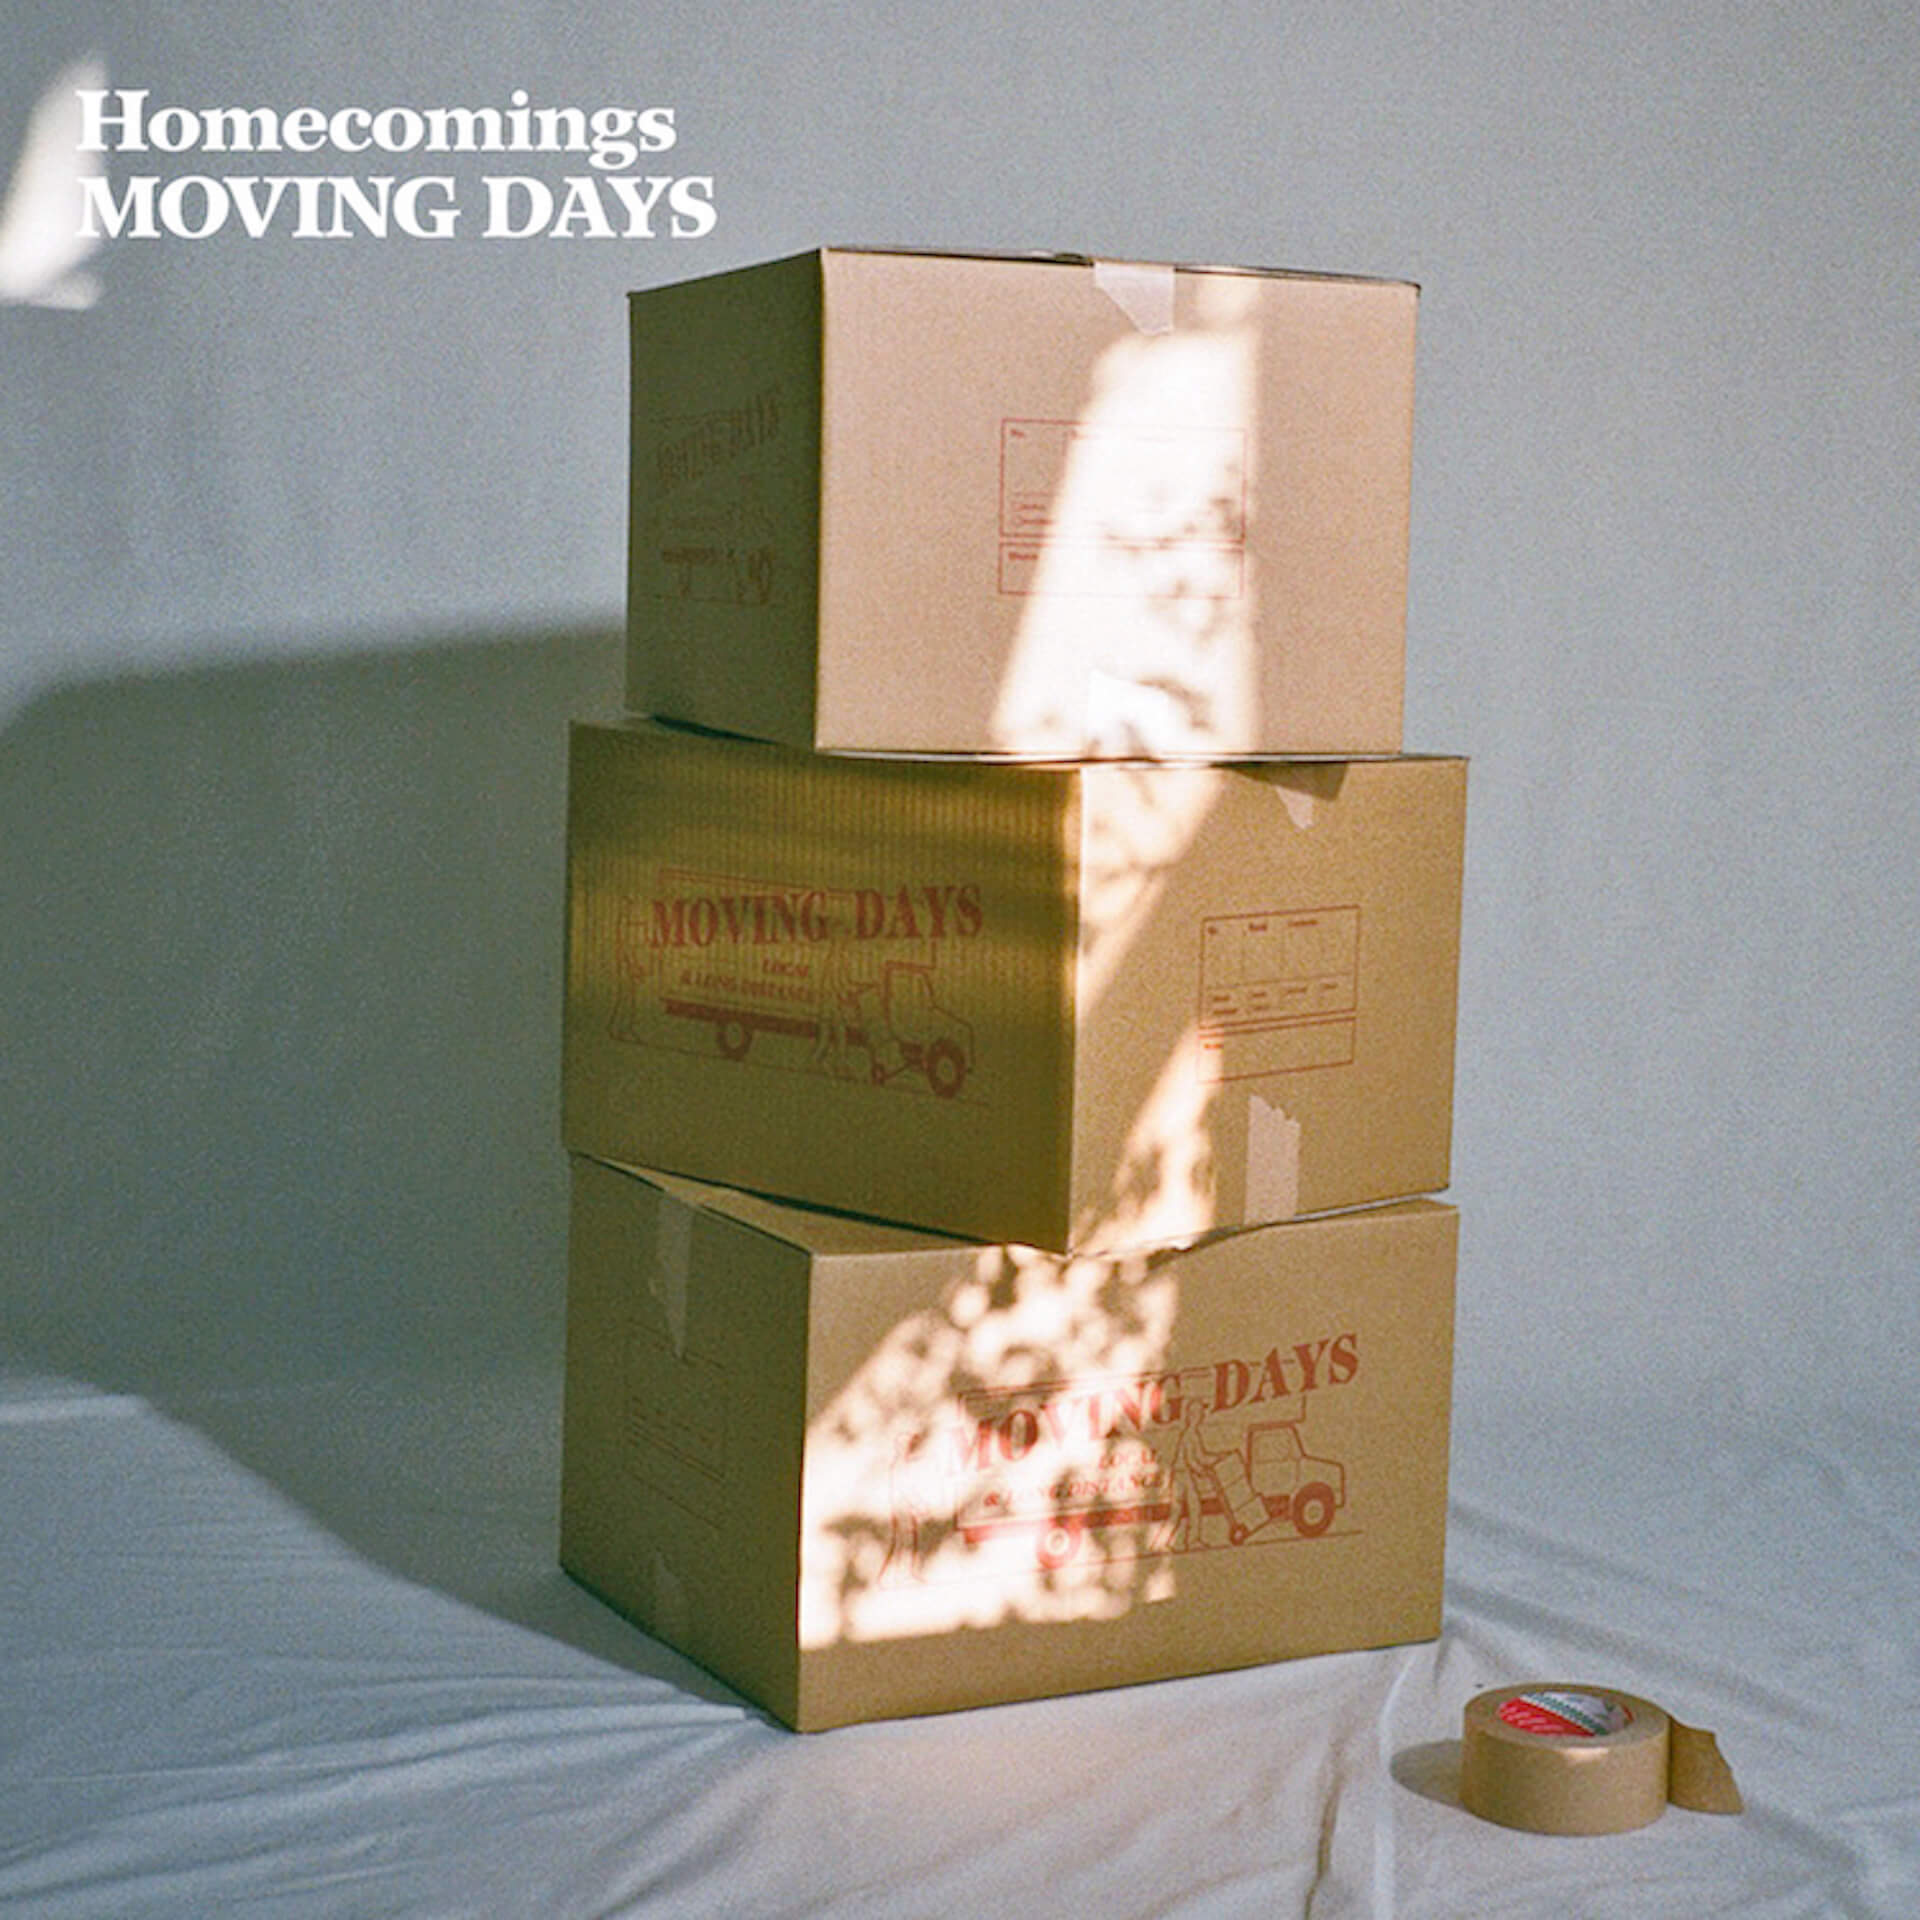 Homecomingsのメジャーデビューアルバム『Moving Days』がまもなく発売！発売記念フリーペーパー配布やコラージュパネルの展示が決定 music210510_homecomings-210510_3